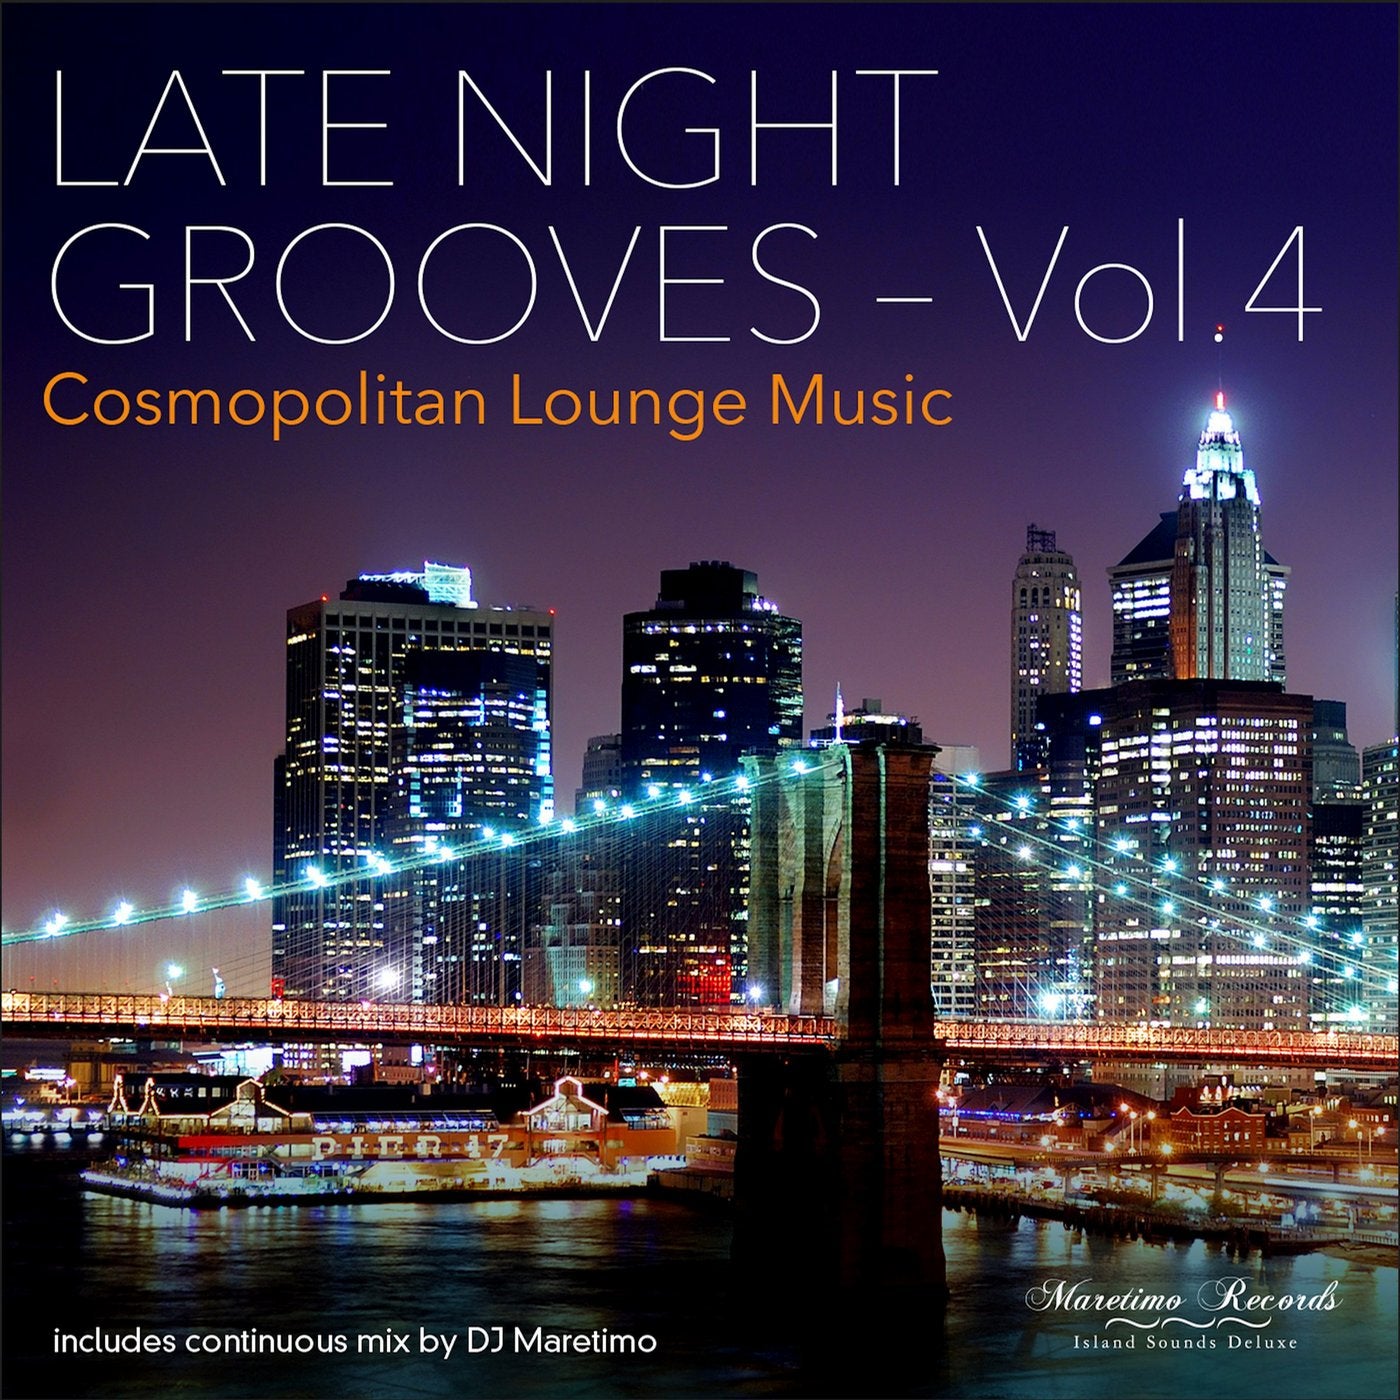 Late Night Grooves, Vol. 4 - Cosmopolitan Lounge Music